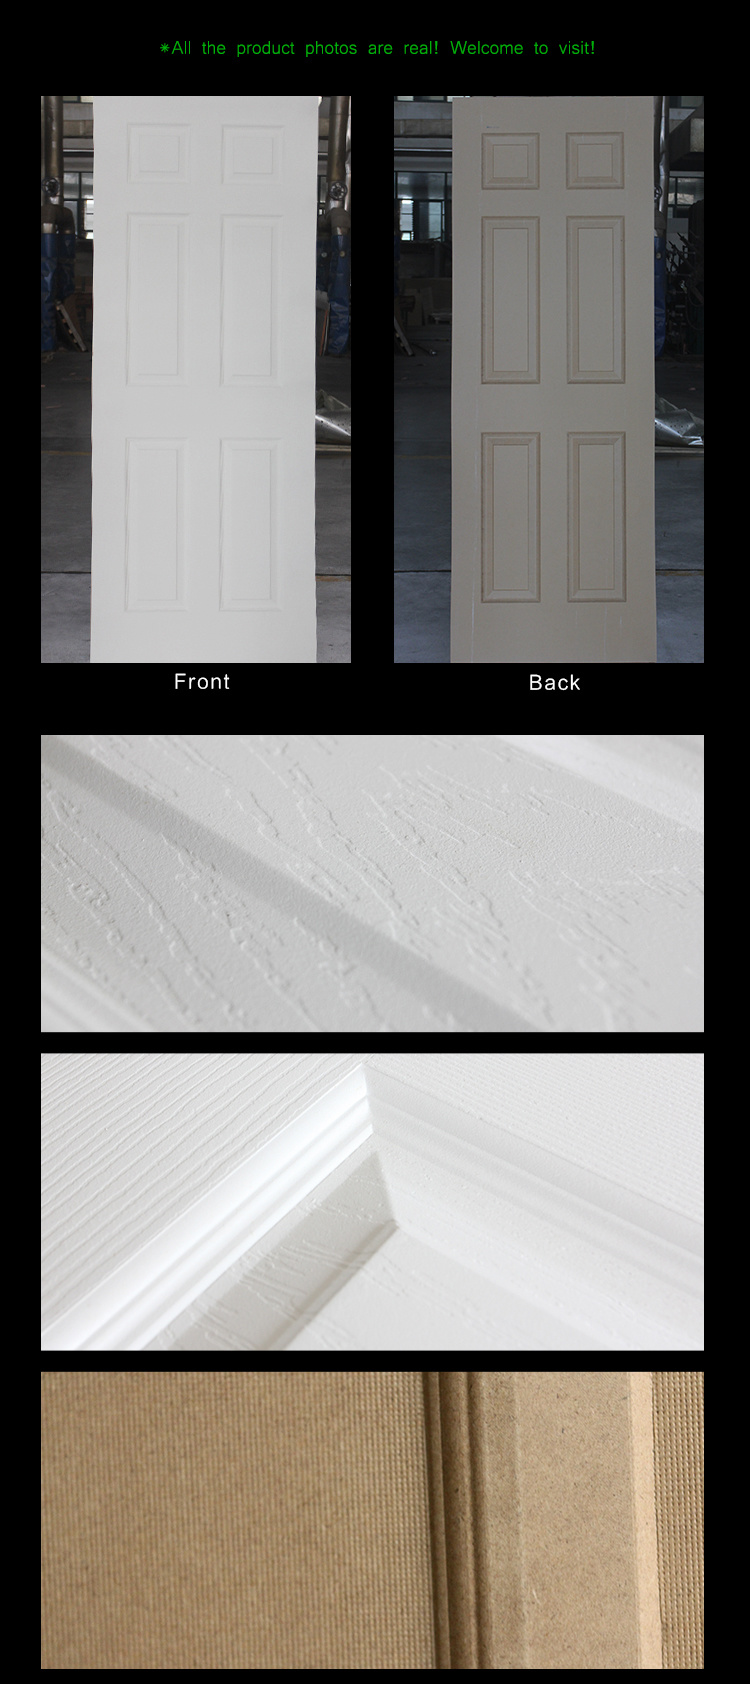 Jhk Automotive Paint Coating White Mould White Primer Door Skin